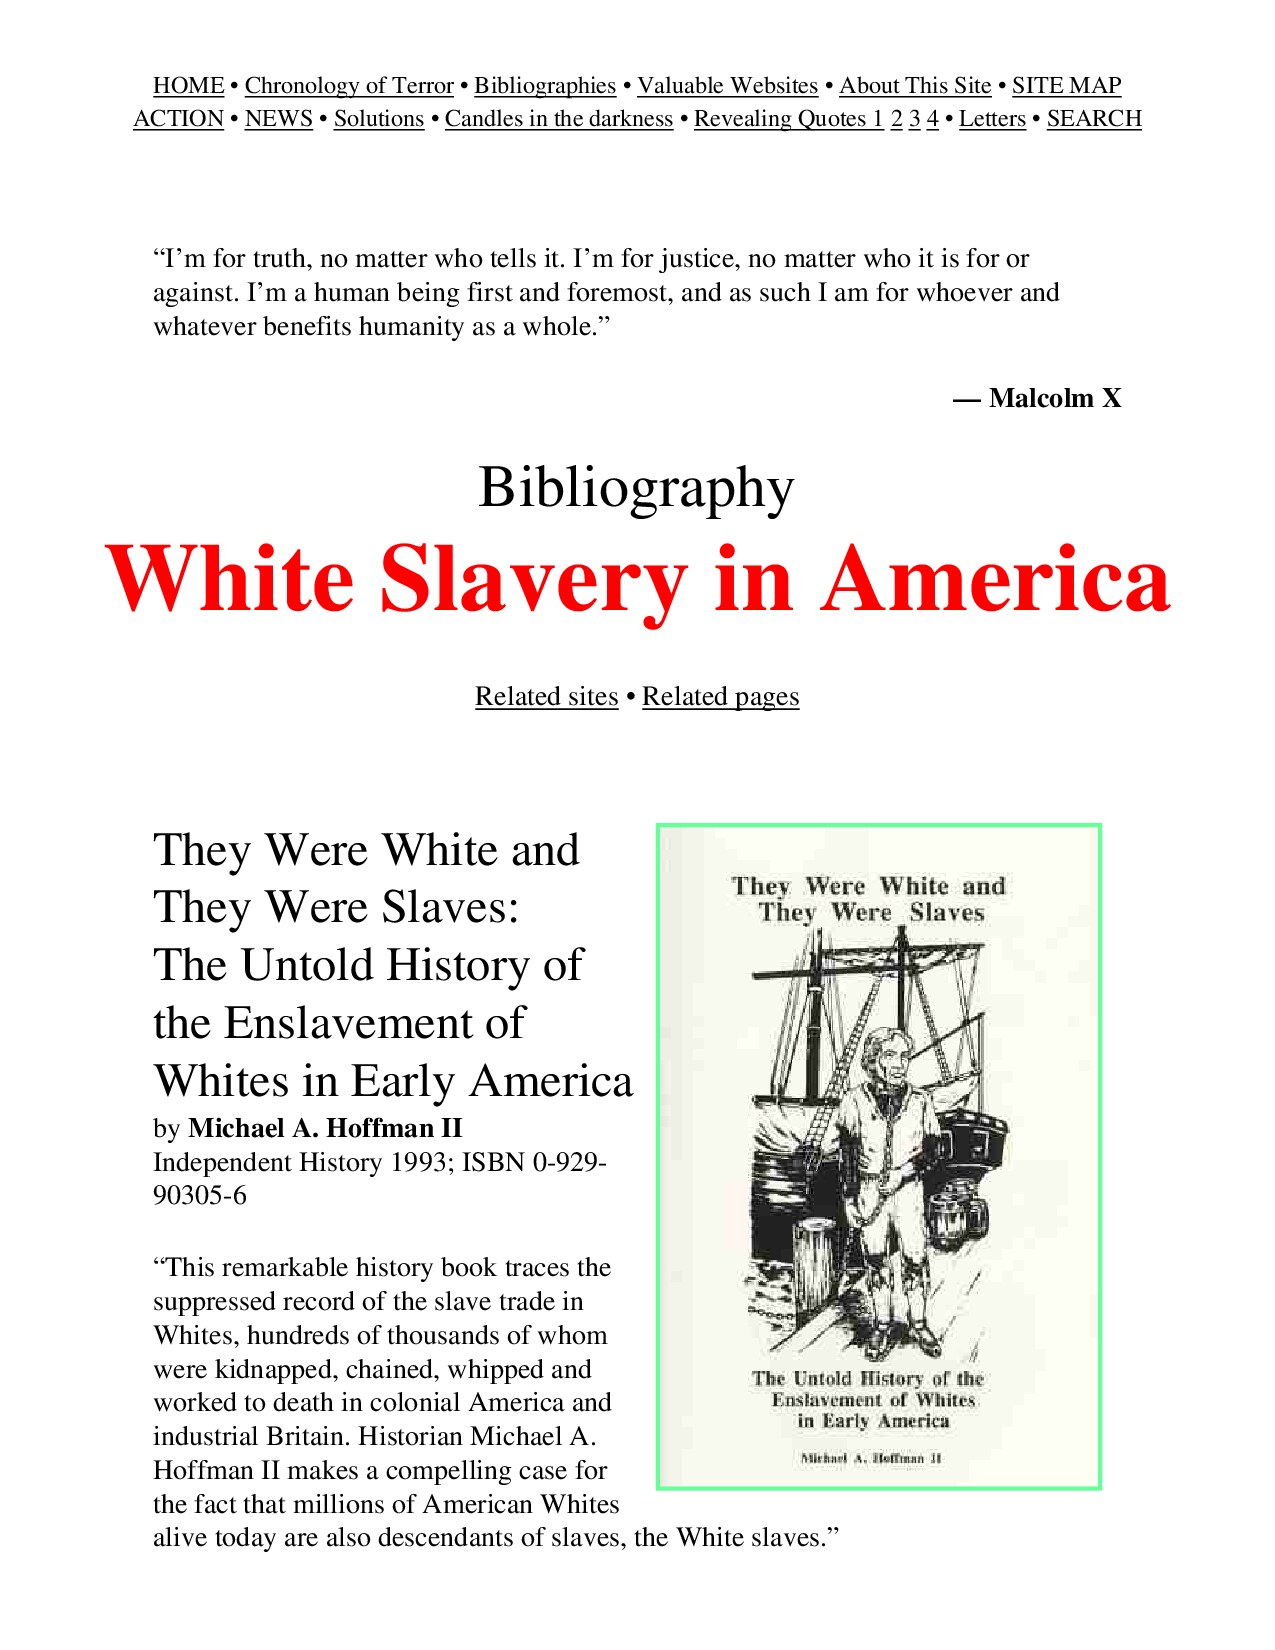 White Slavery in America - Bibliography